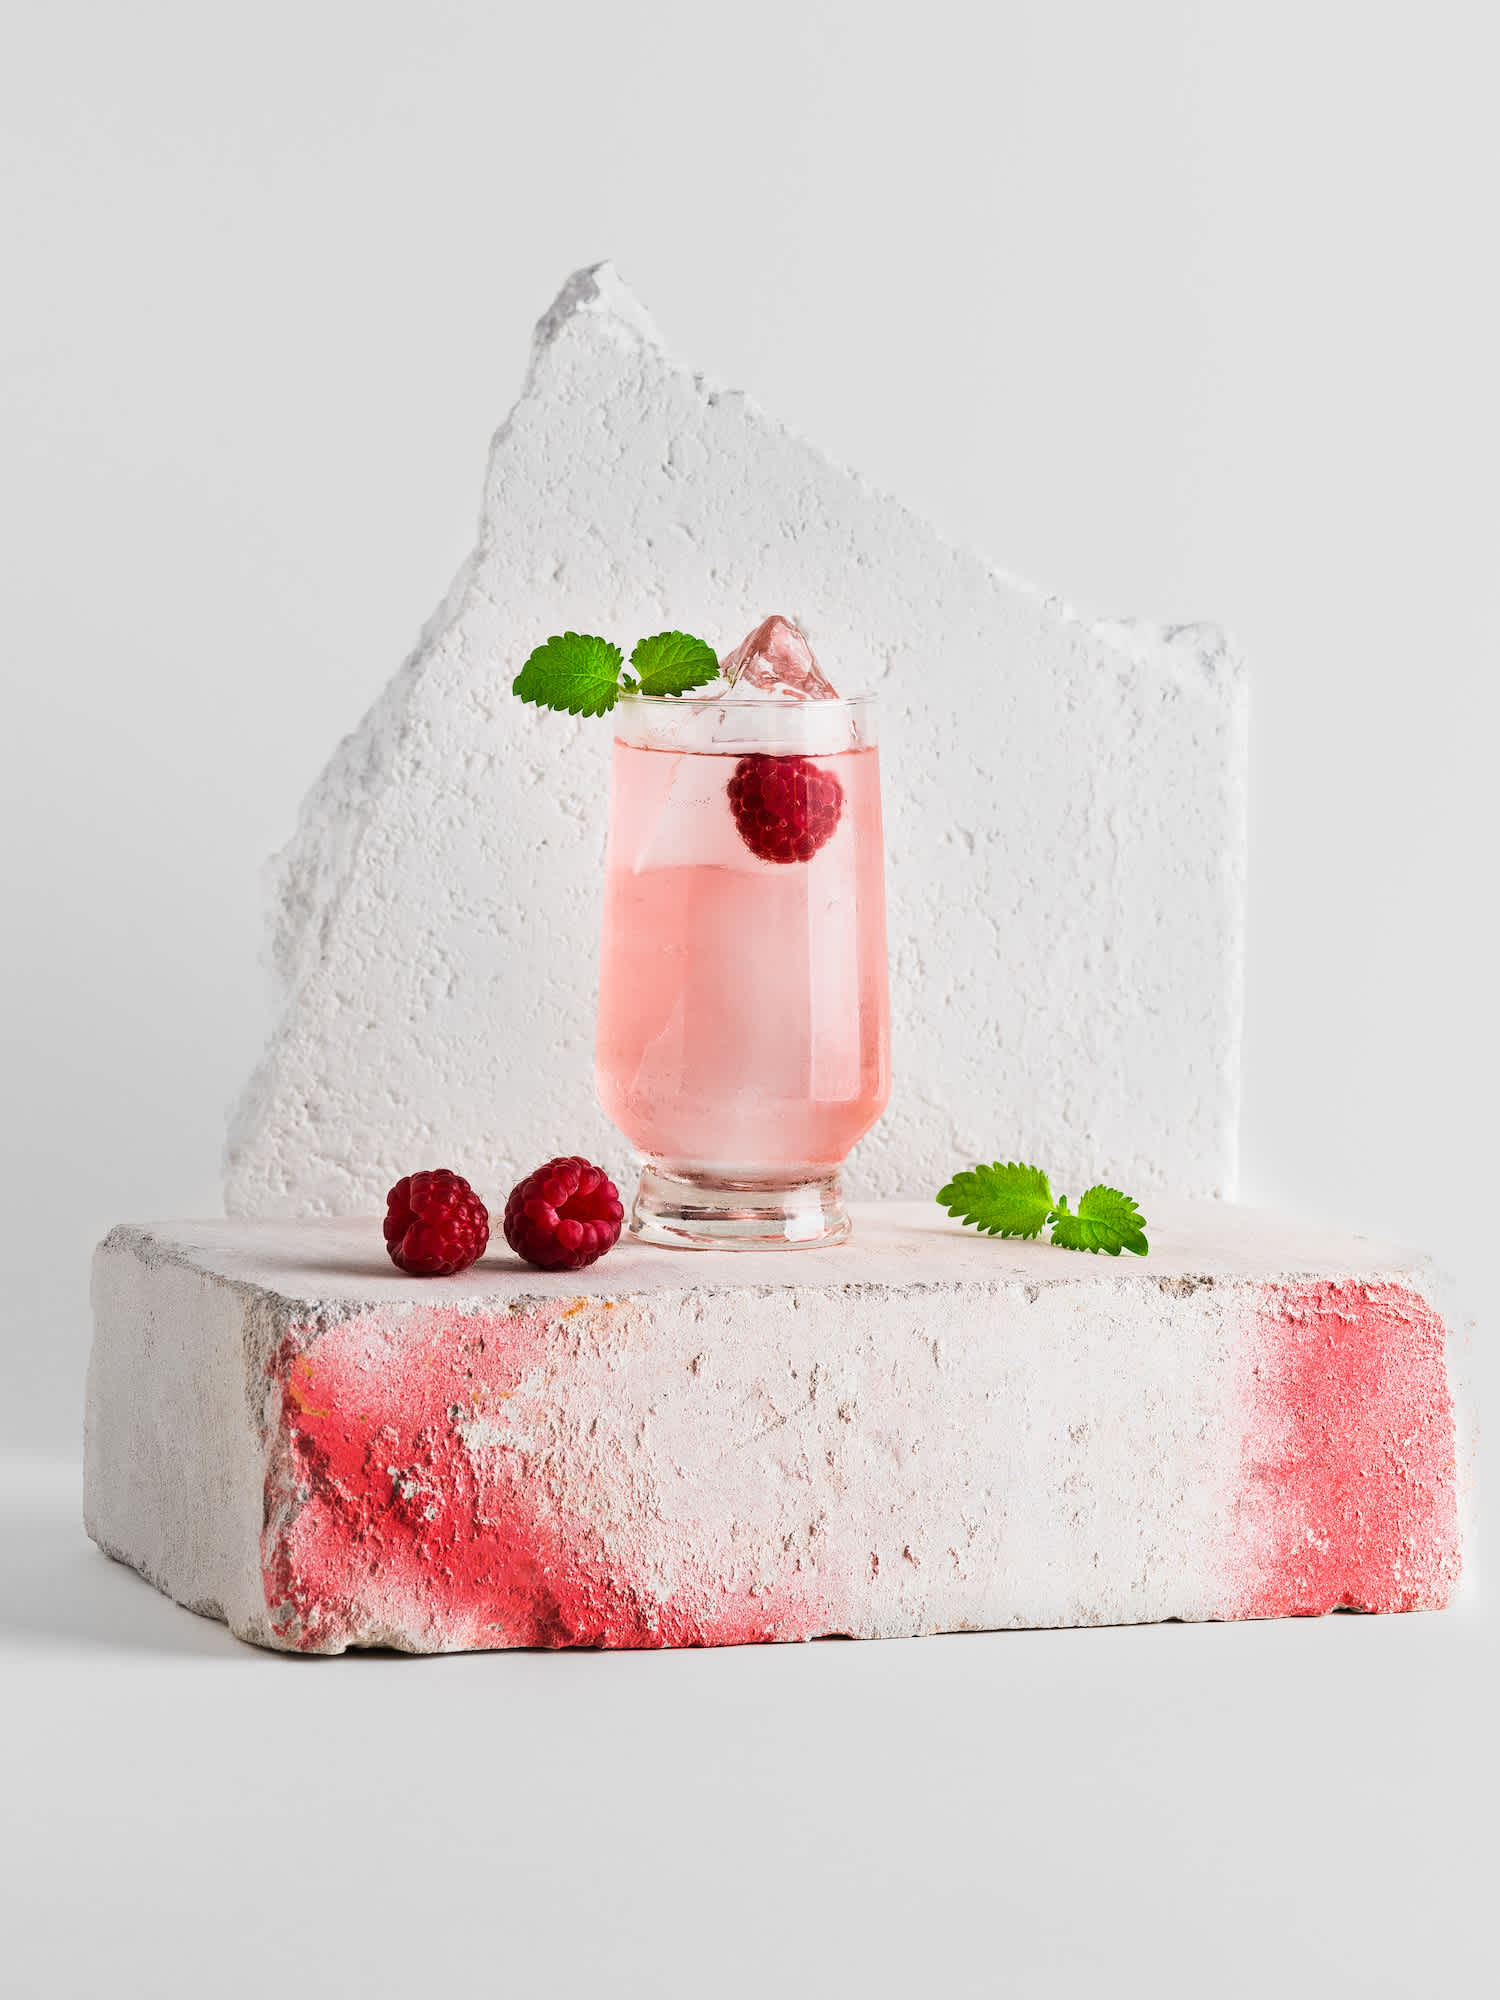 Pink cocktail made using Kyrö Kinobi Gin, tonic water and fresh raspberries.